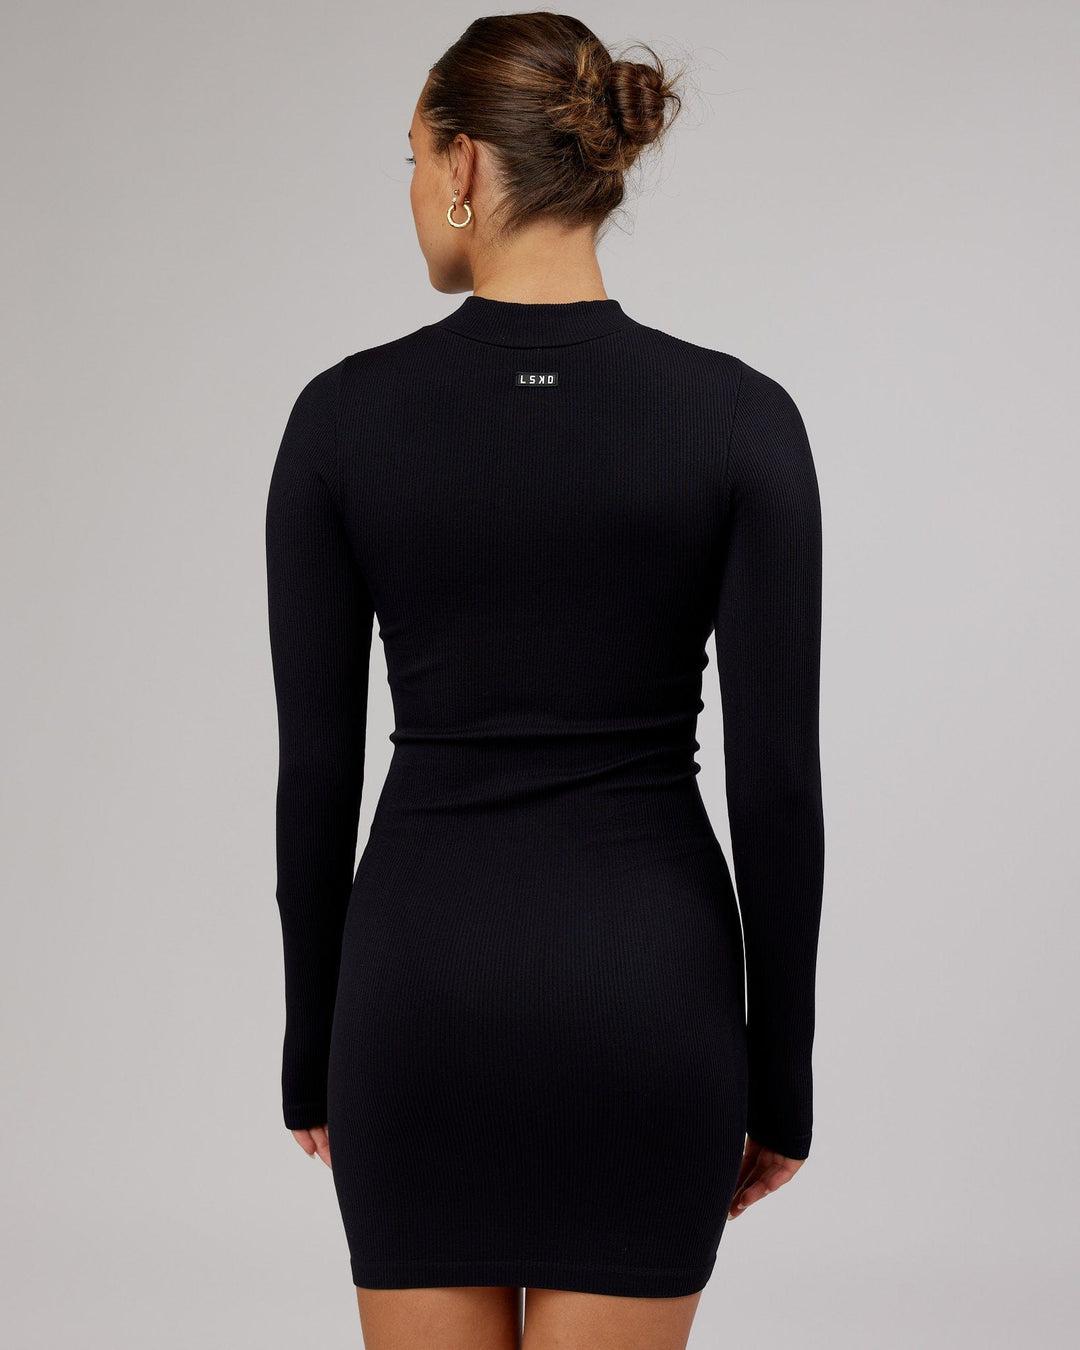 Woman wearing Minimal Ribbed Seamless LS Dress - Black